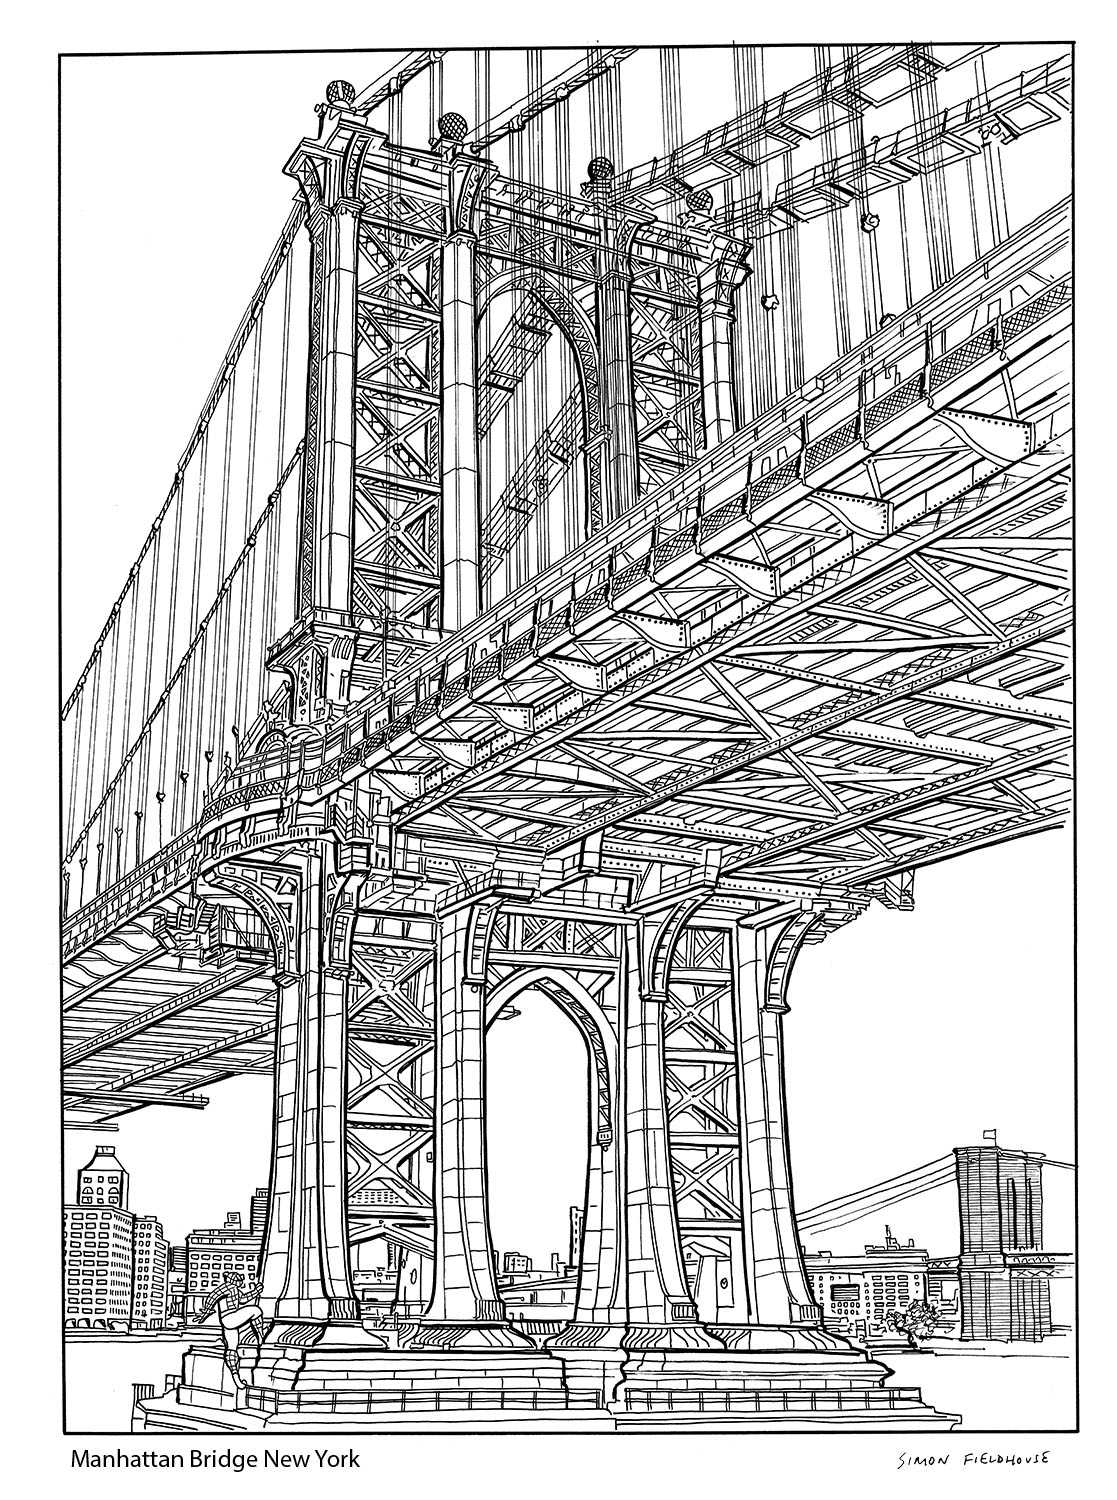 Manhattan Bridge New York - Simon Fieldhouse